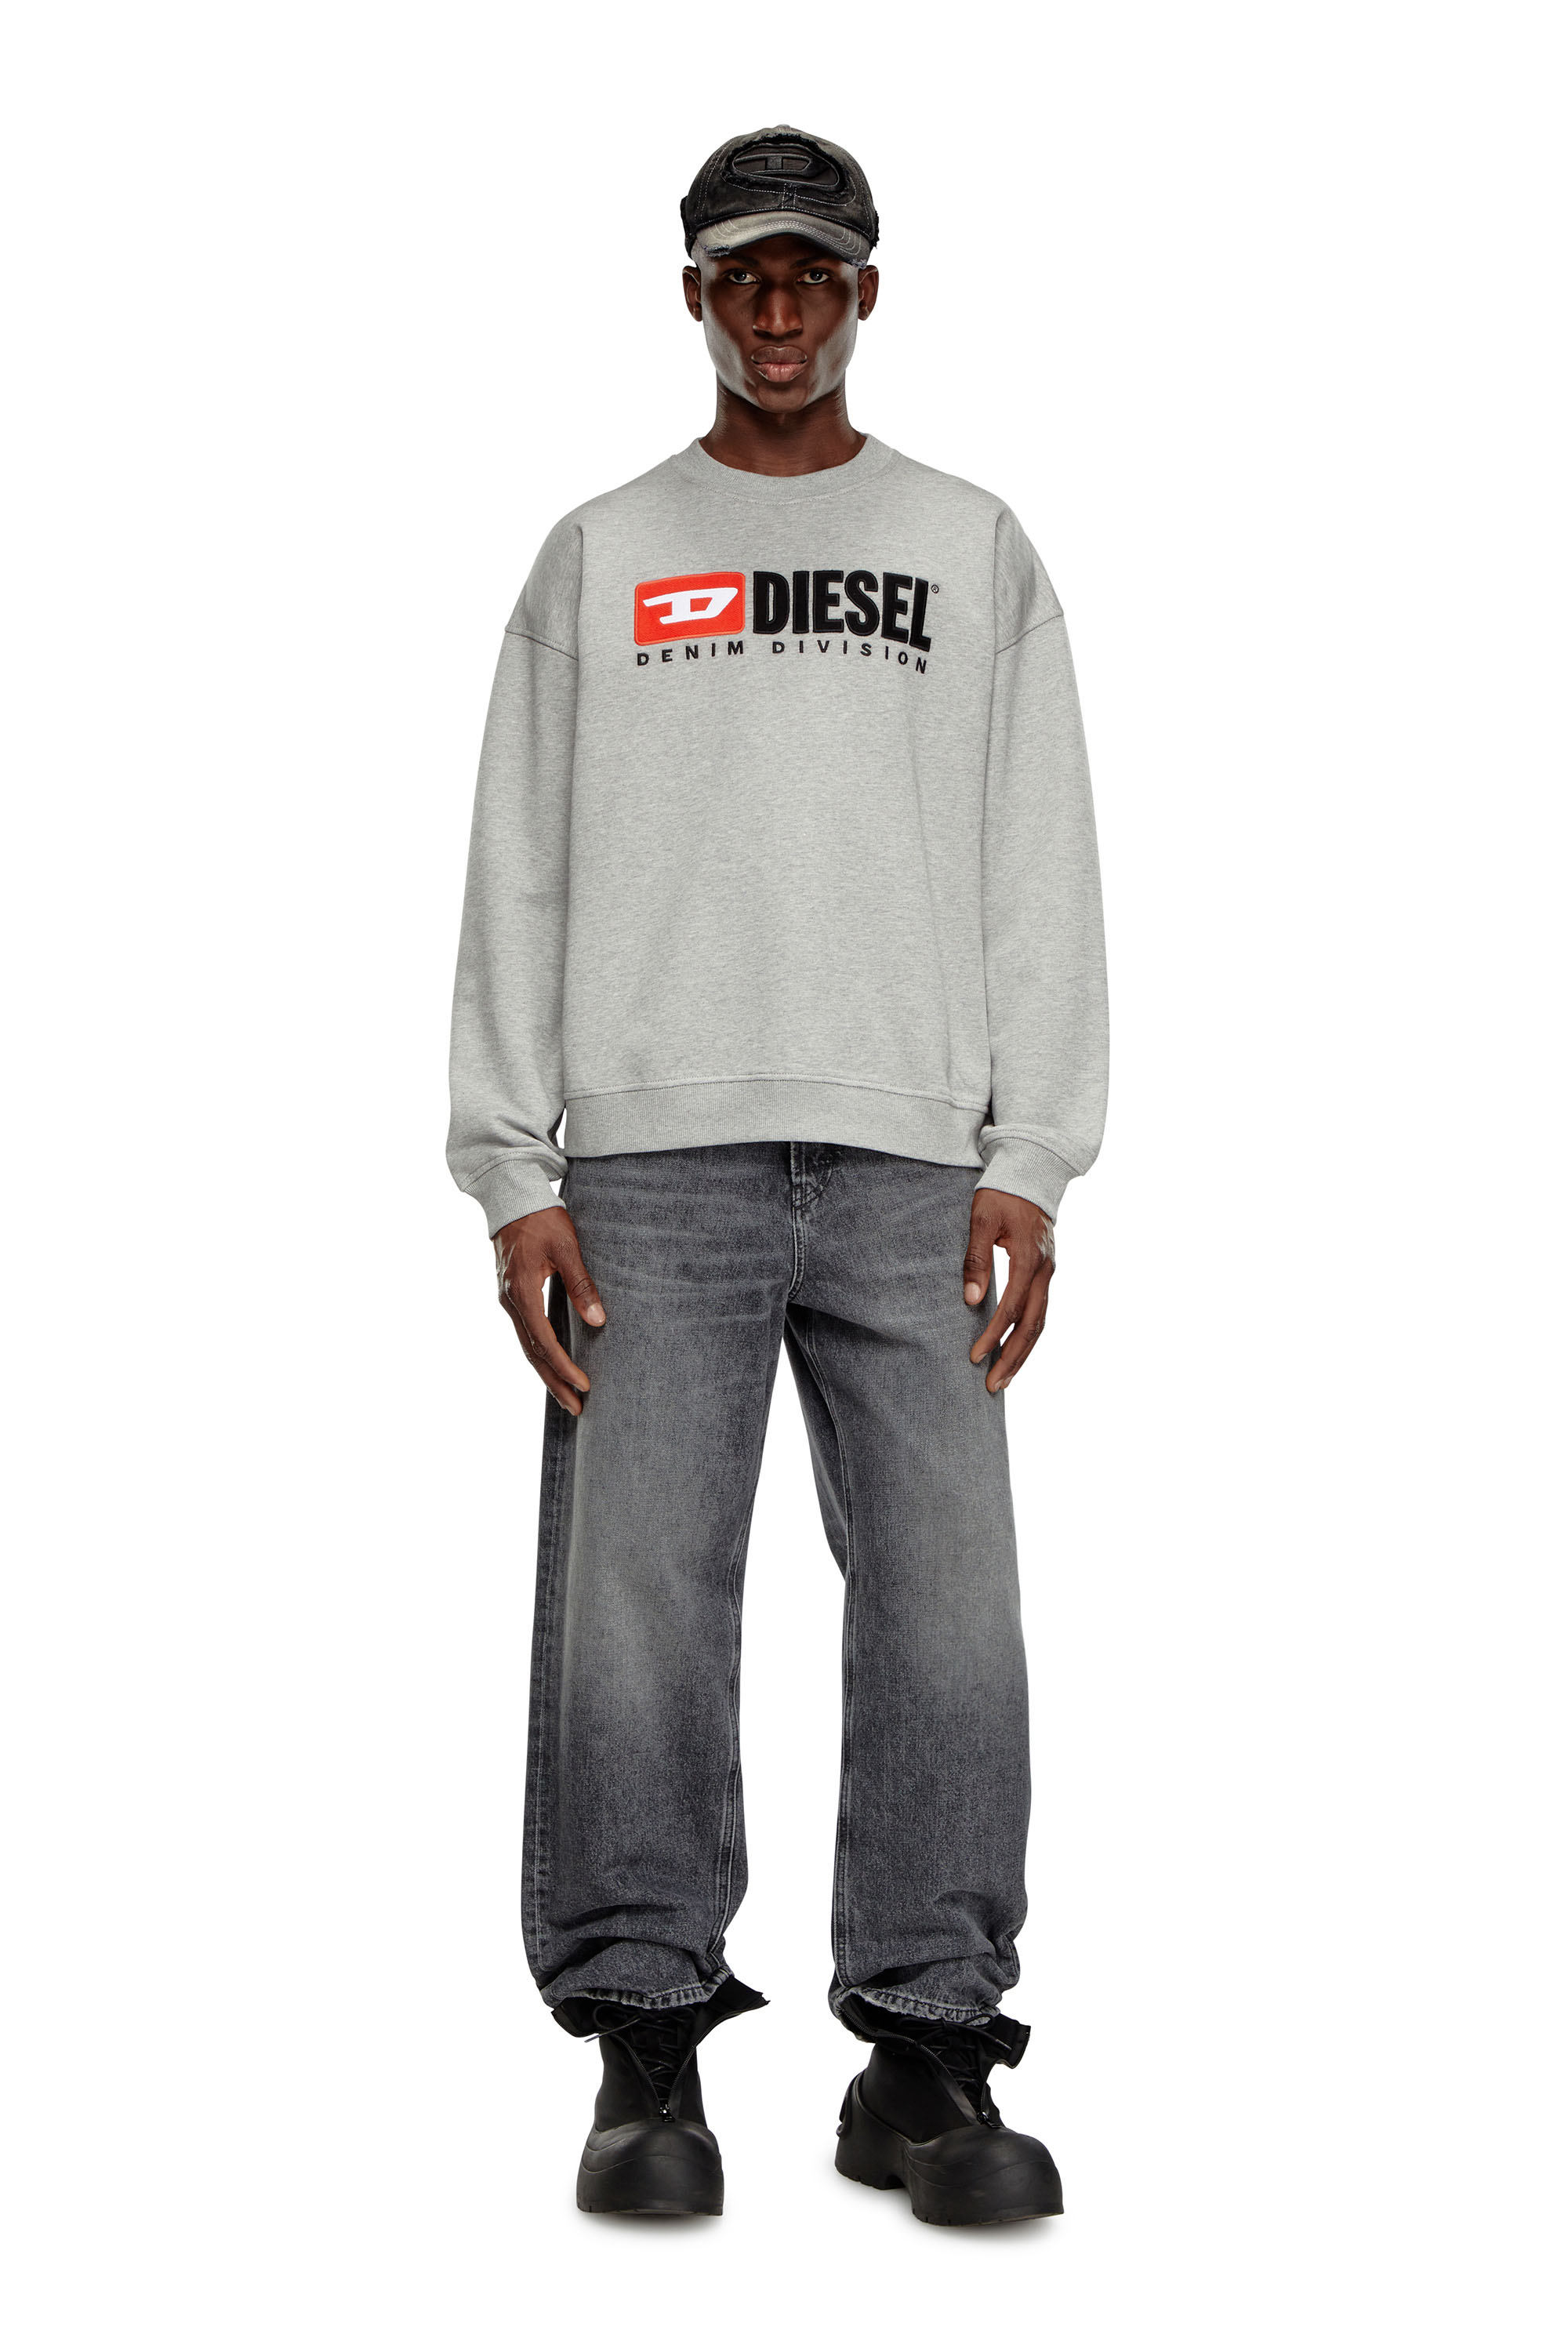 Diesel - S-BOXT-DIV, Man Sweatshirt with Denim Division logo in Grey - Image 2